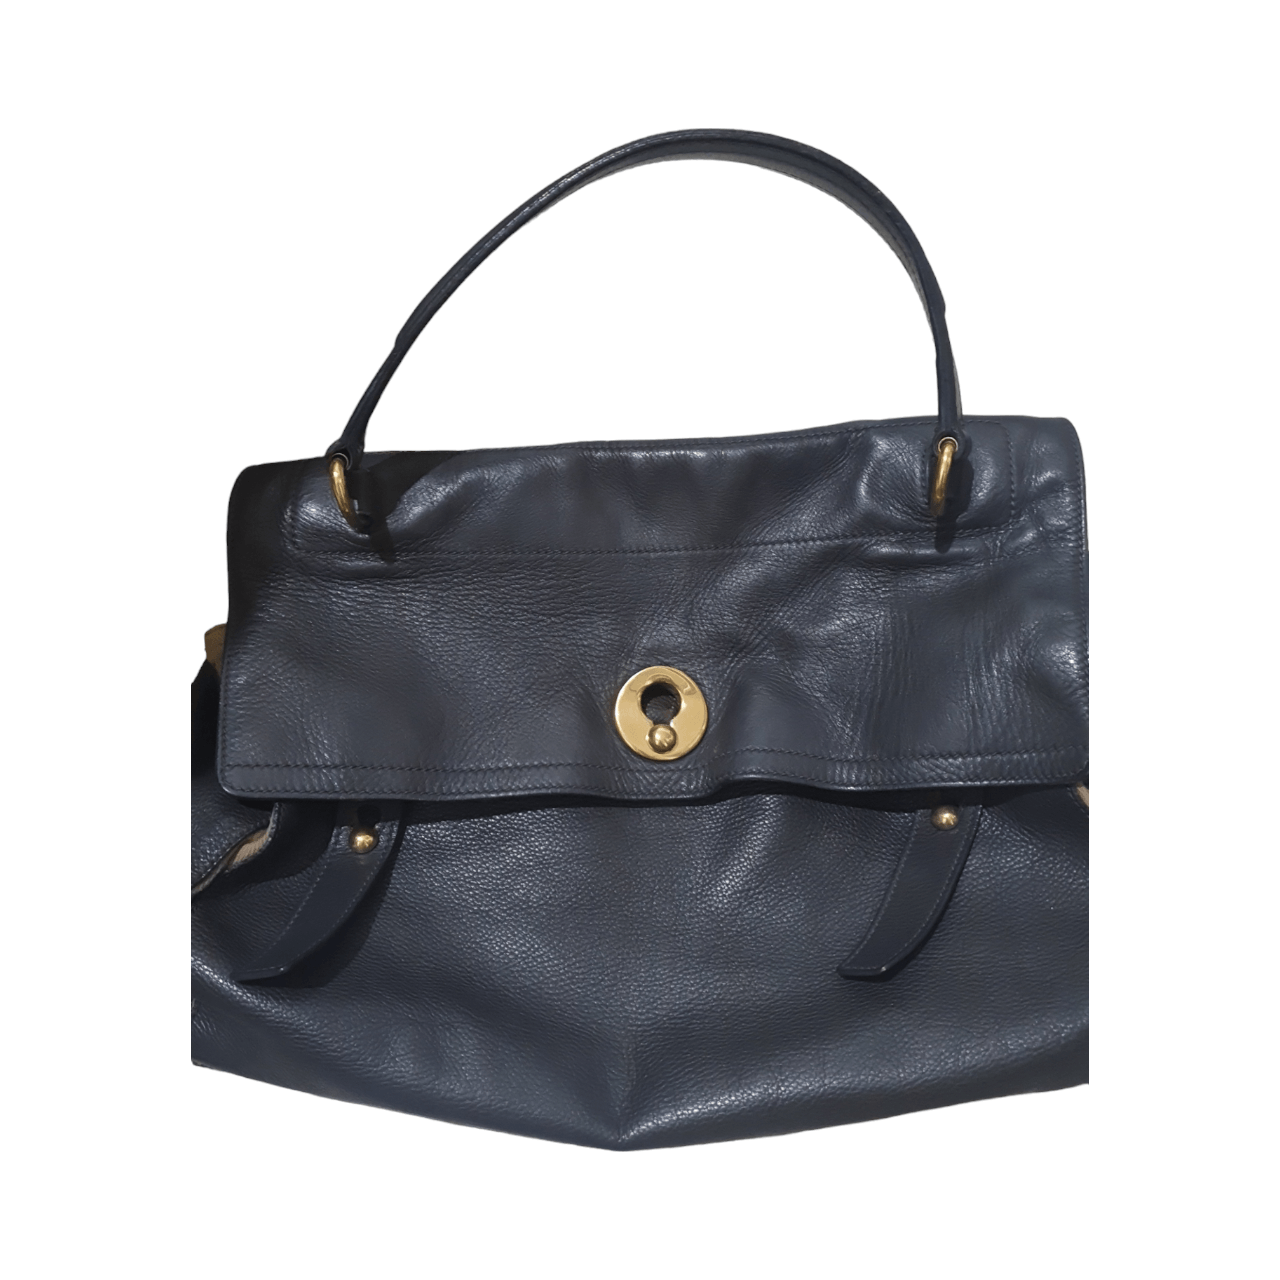 Yves Saint Laurent Muse Two Grey Leather Handbag